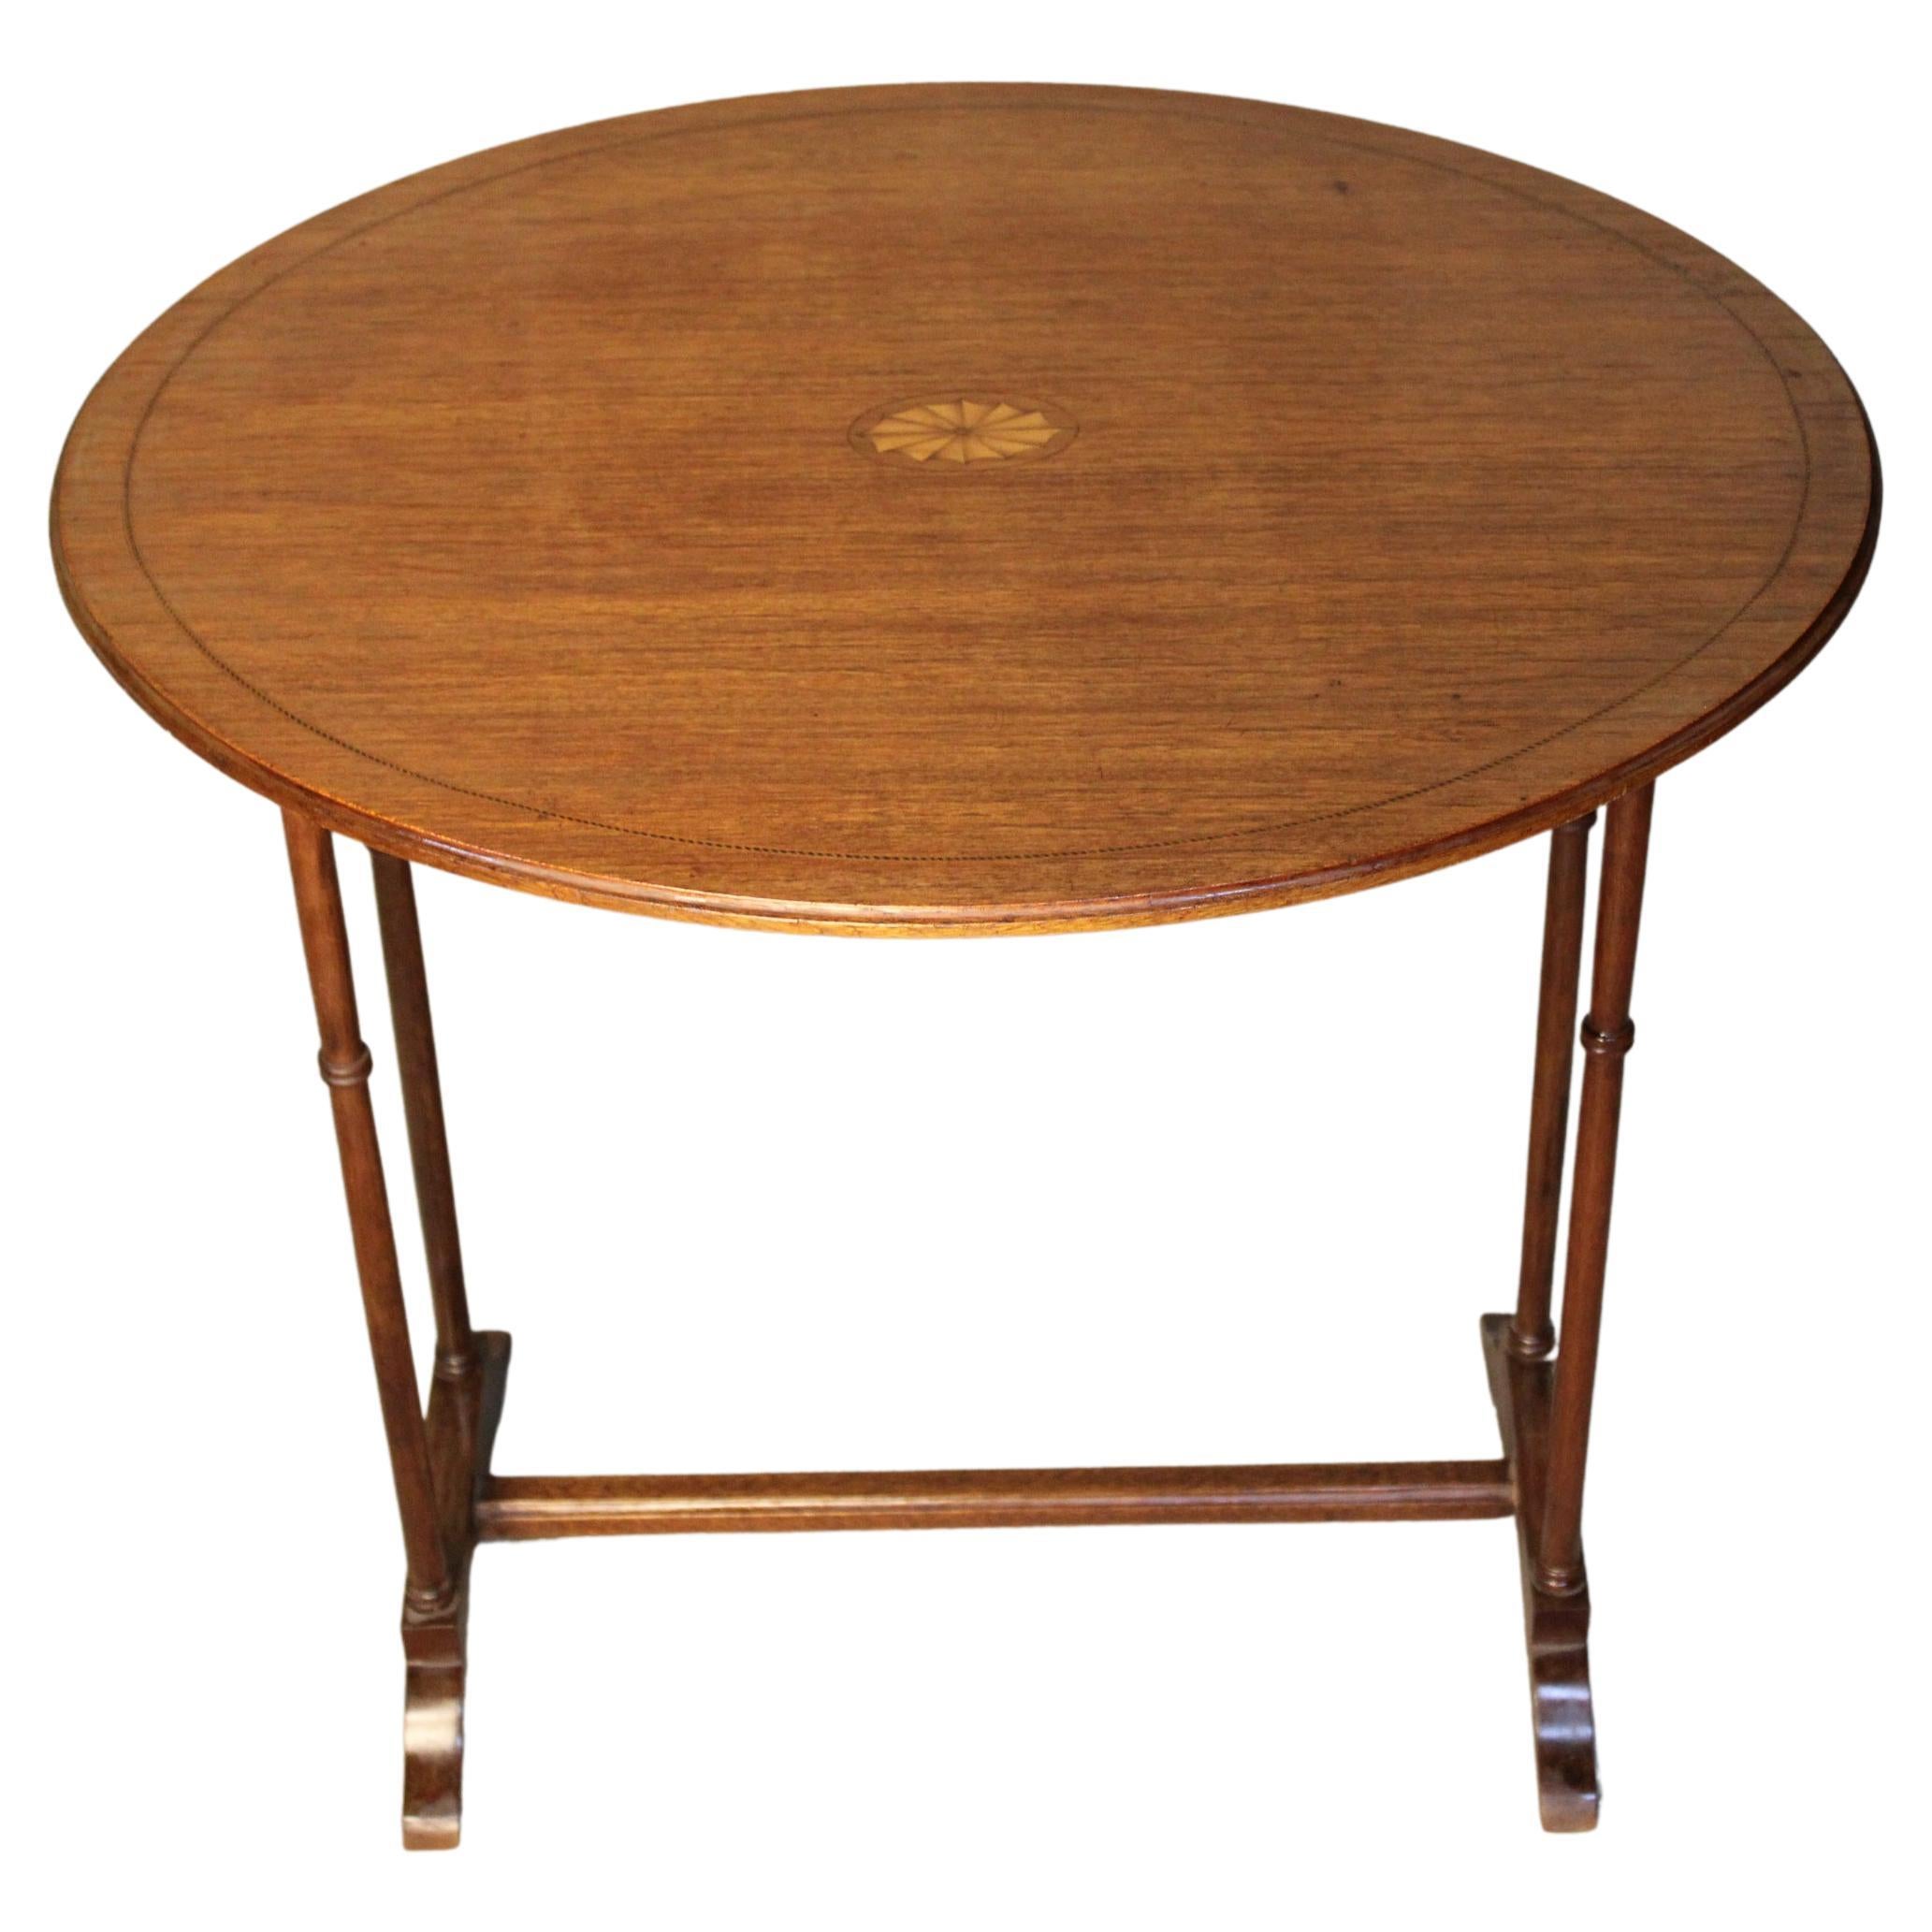 19th century English Coffee Table in Mahogany coffee table